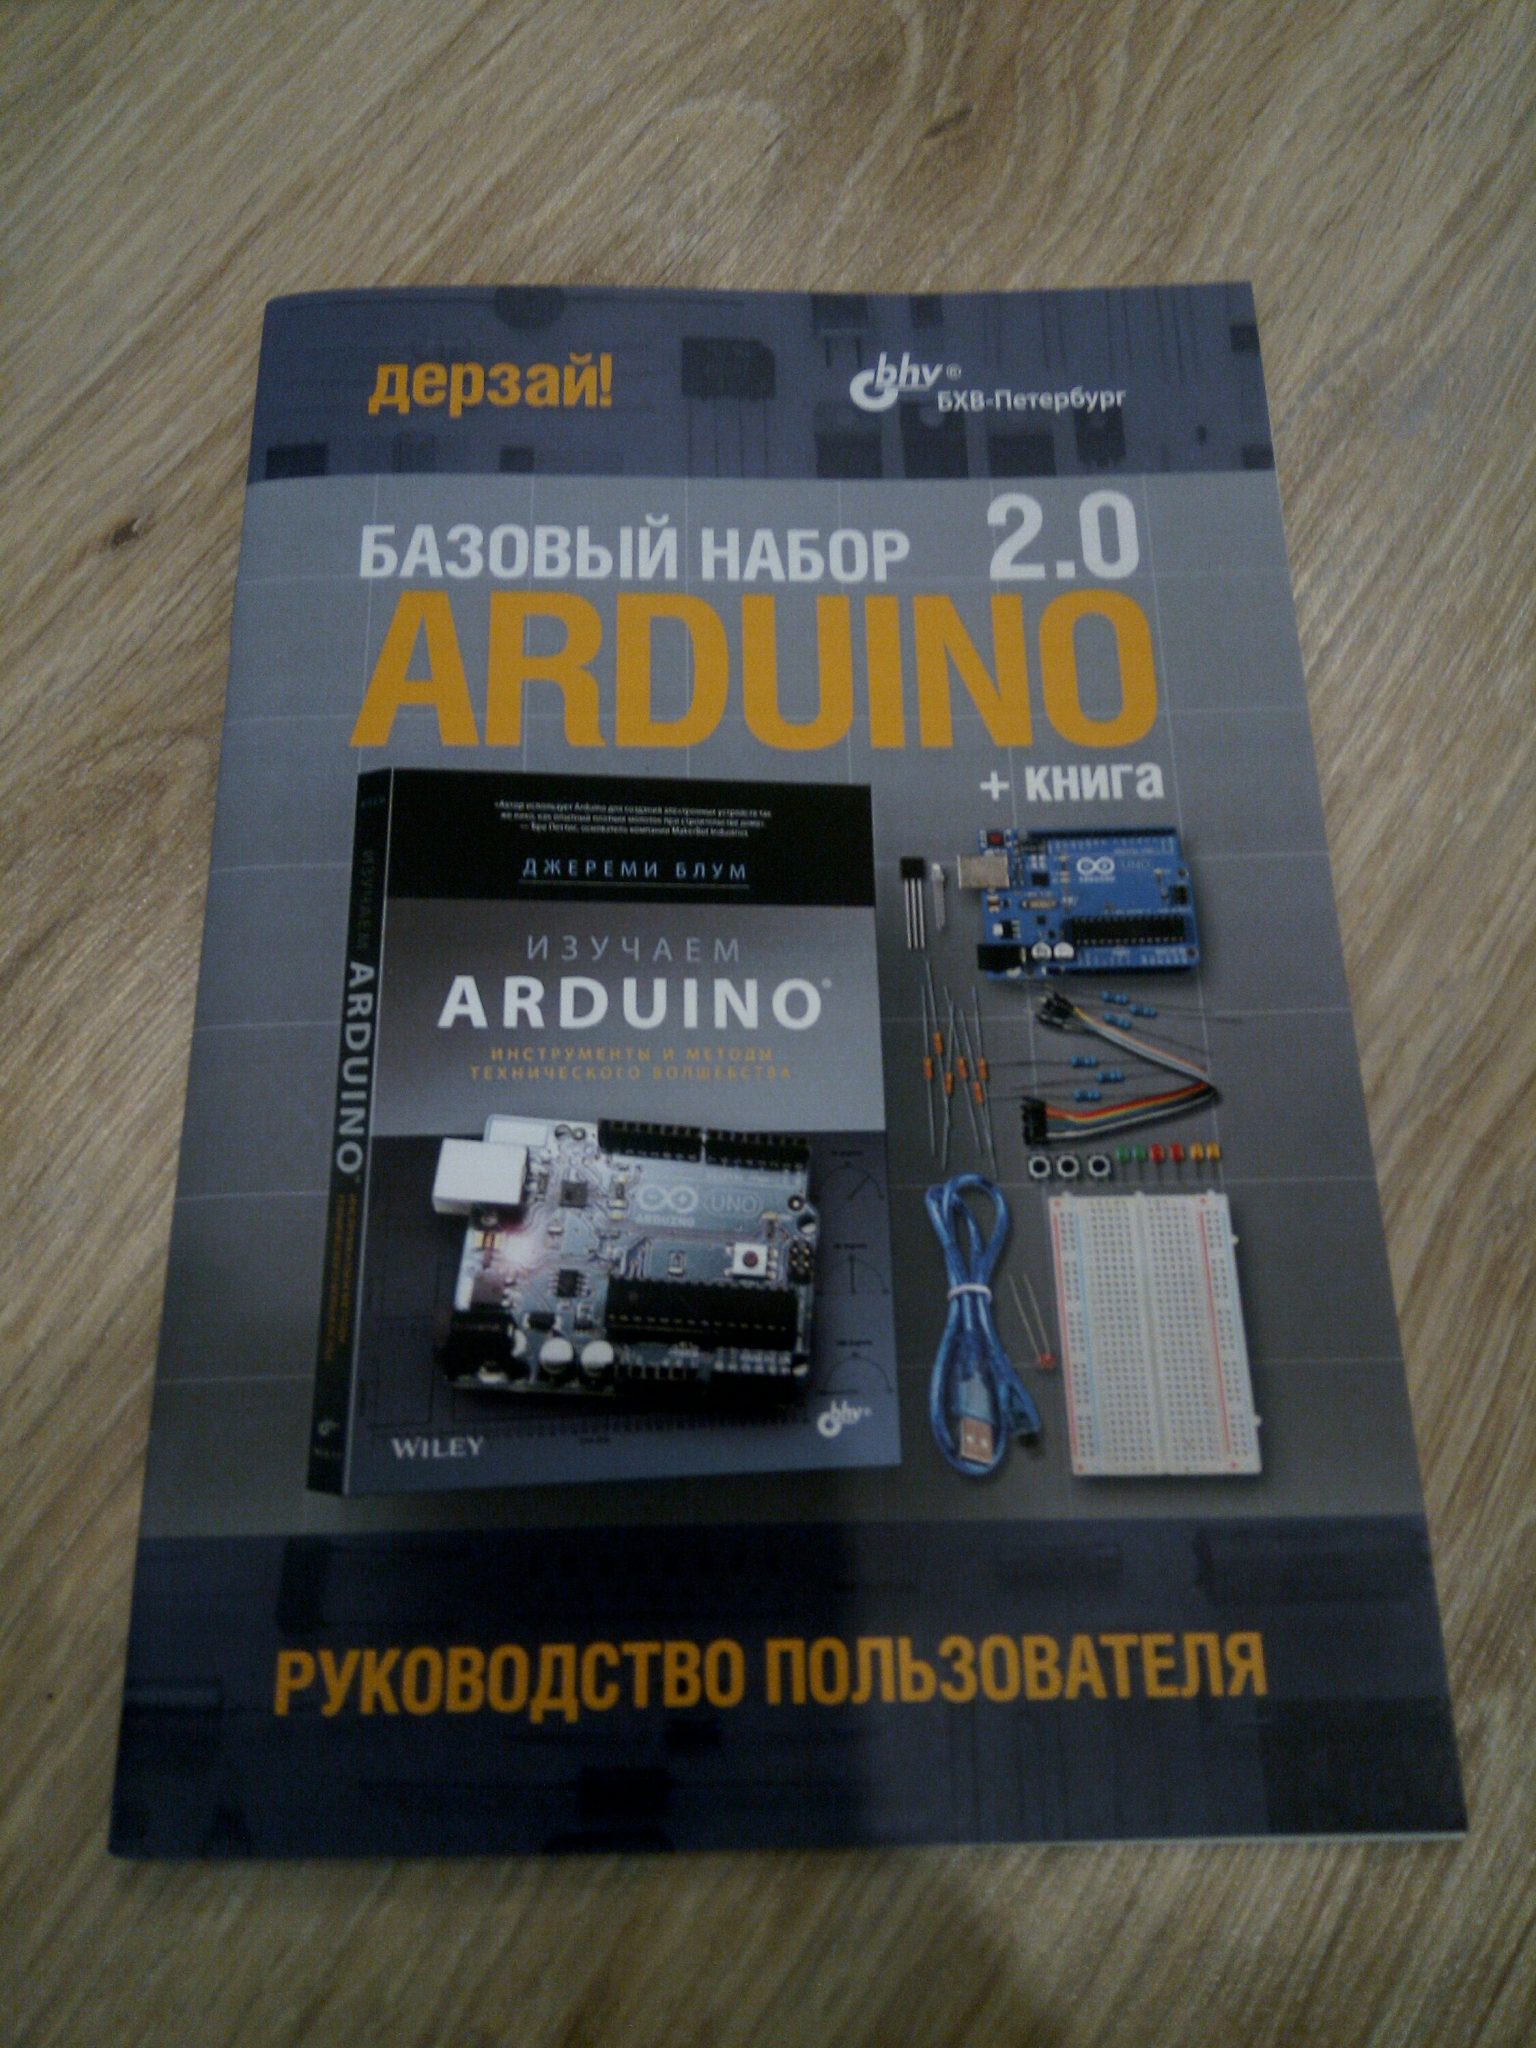 Arduino Uno + Базовый набор